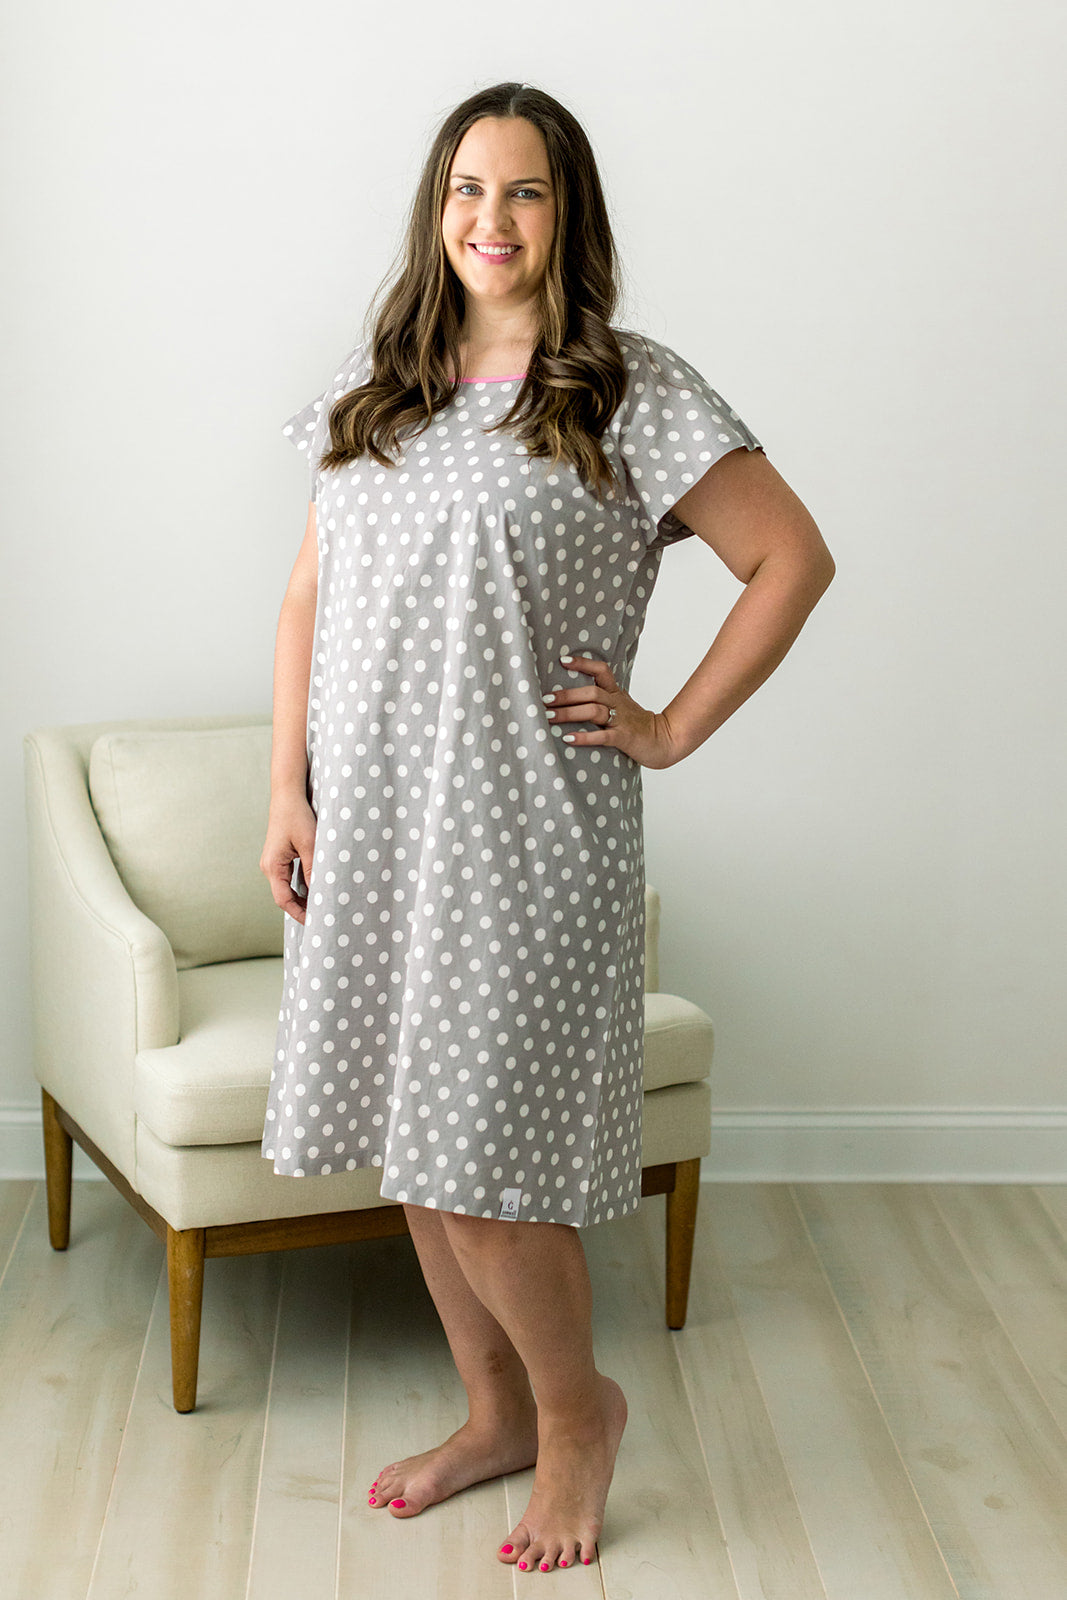 Lisa Patient Hospital Gown